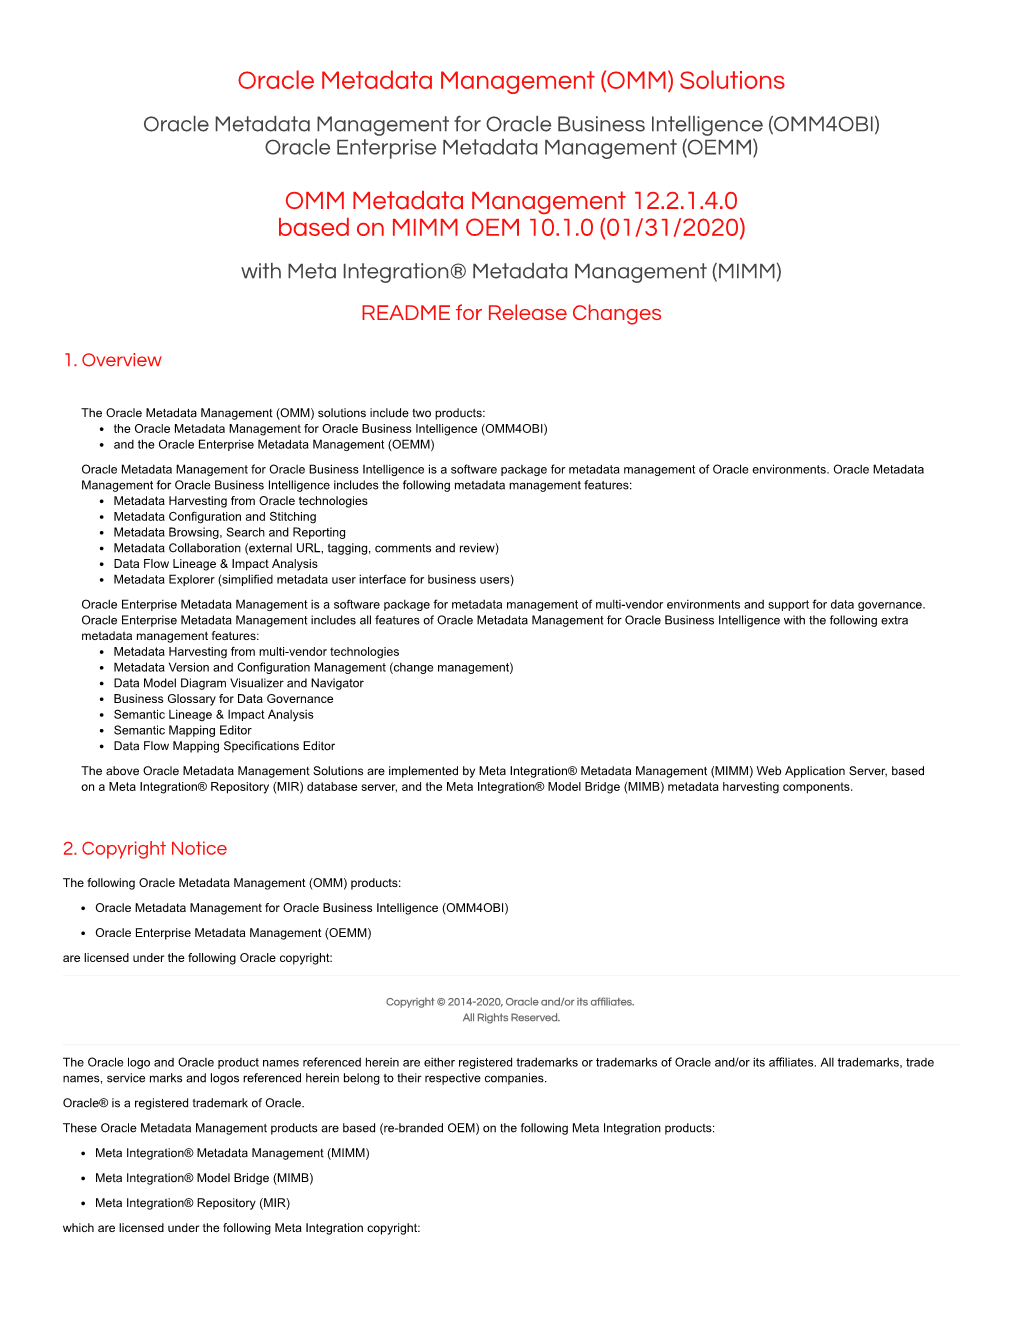 Oracle Metadata Management (OMM) Solutions Oracle Metadata Management for Oracle Business Intelligence (OMM4OBI) Oracle Enterprise Metadata Management (OEMM)